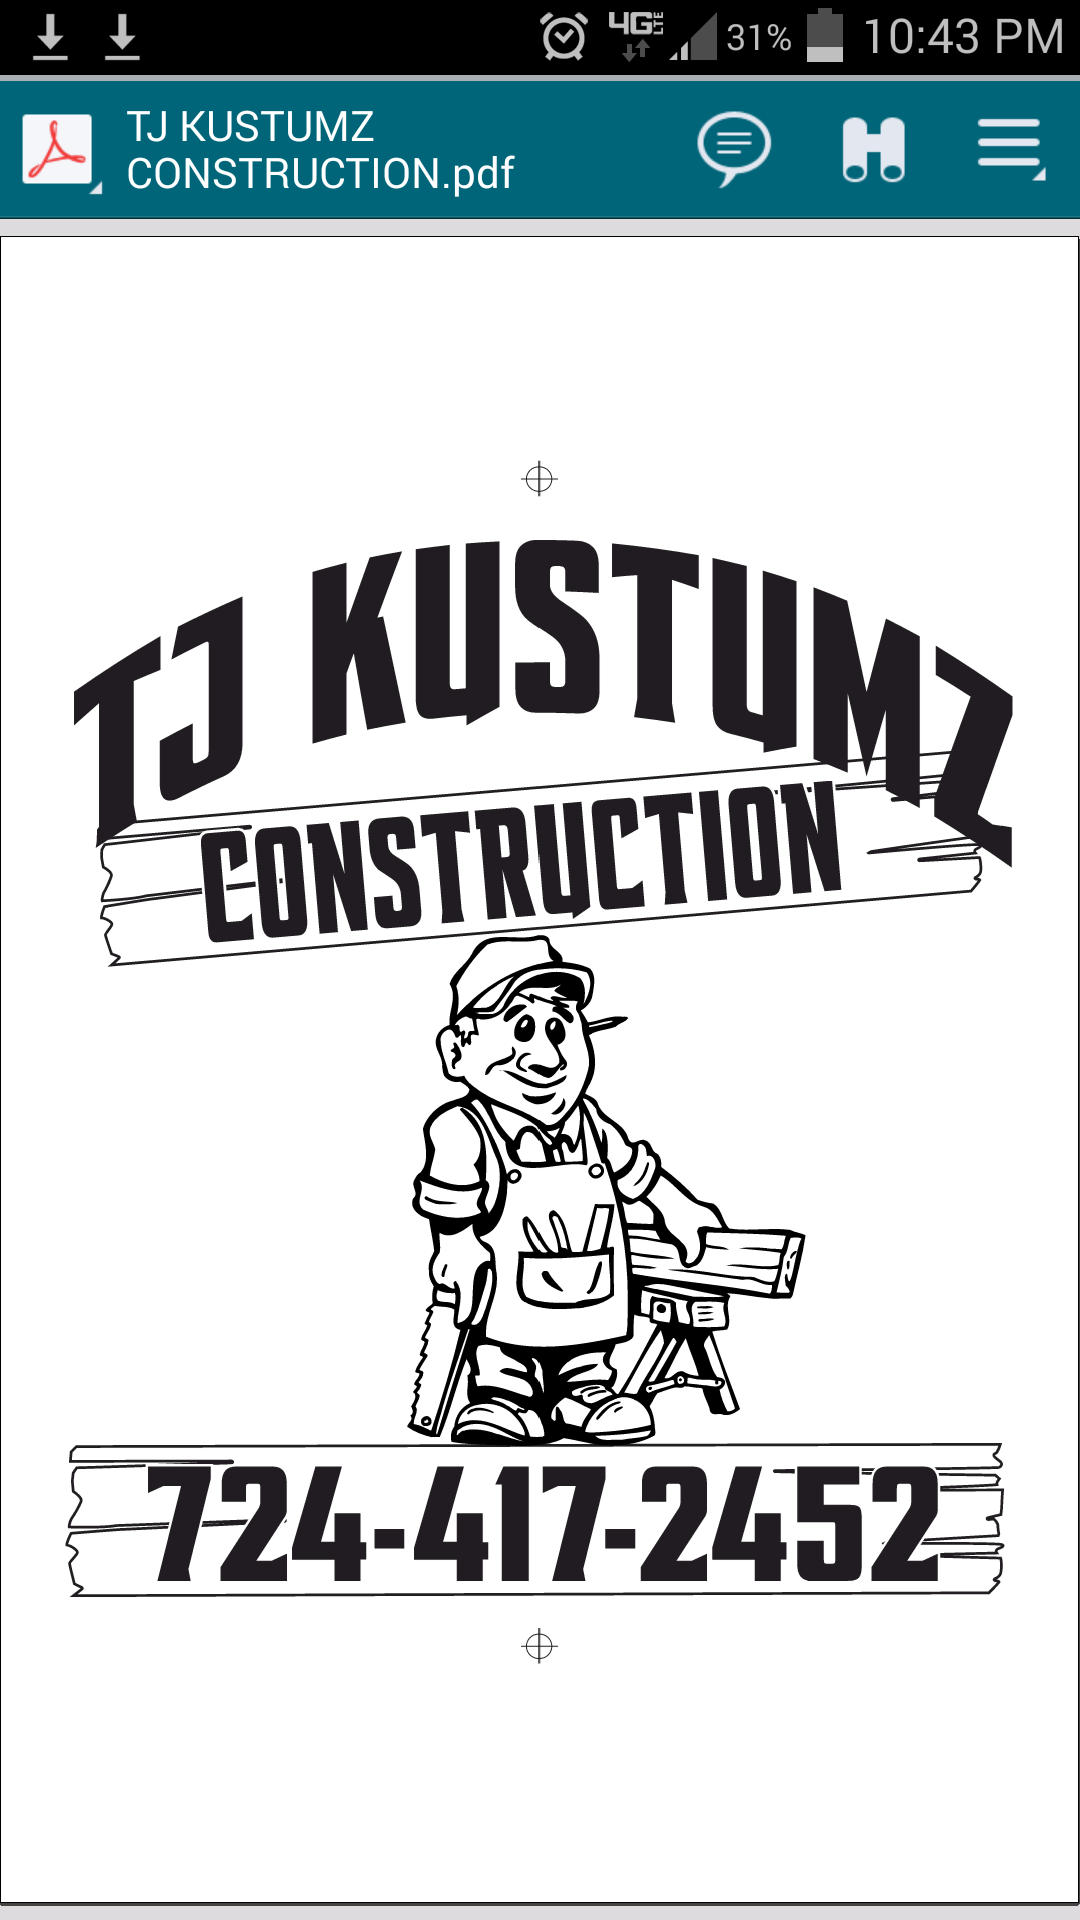 TJKustumz Construction Logo